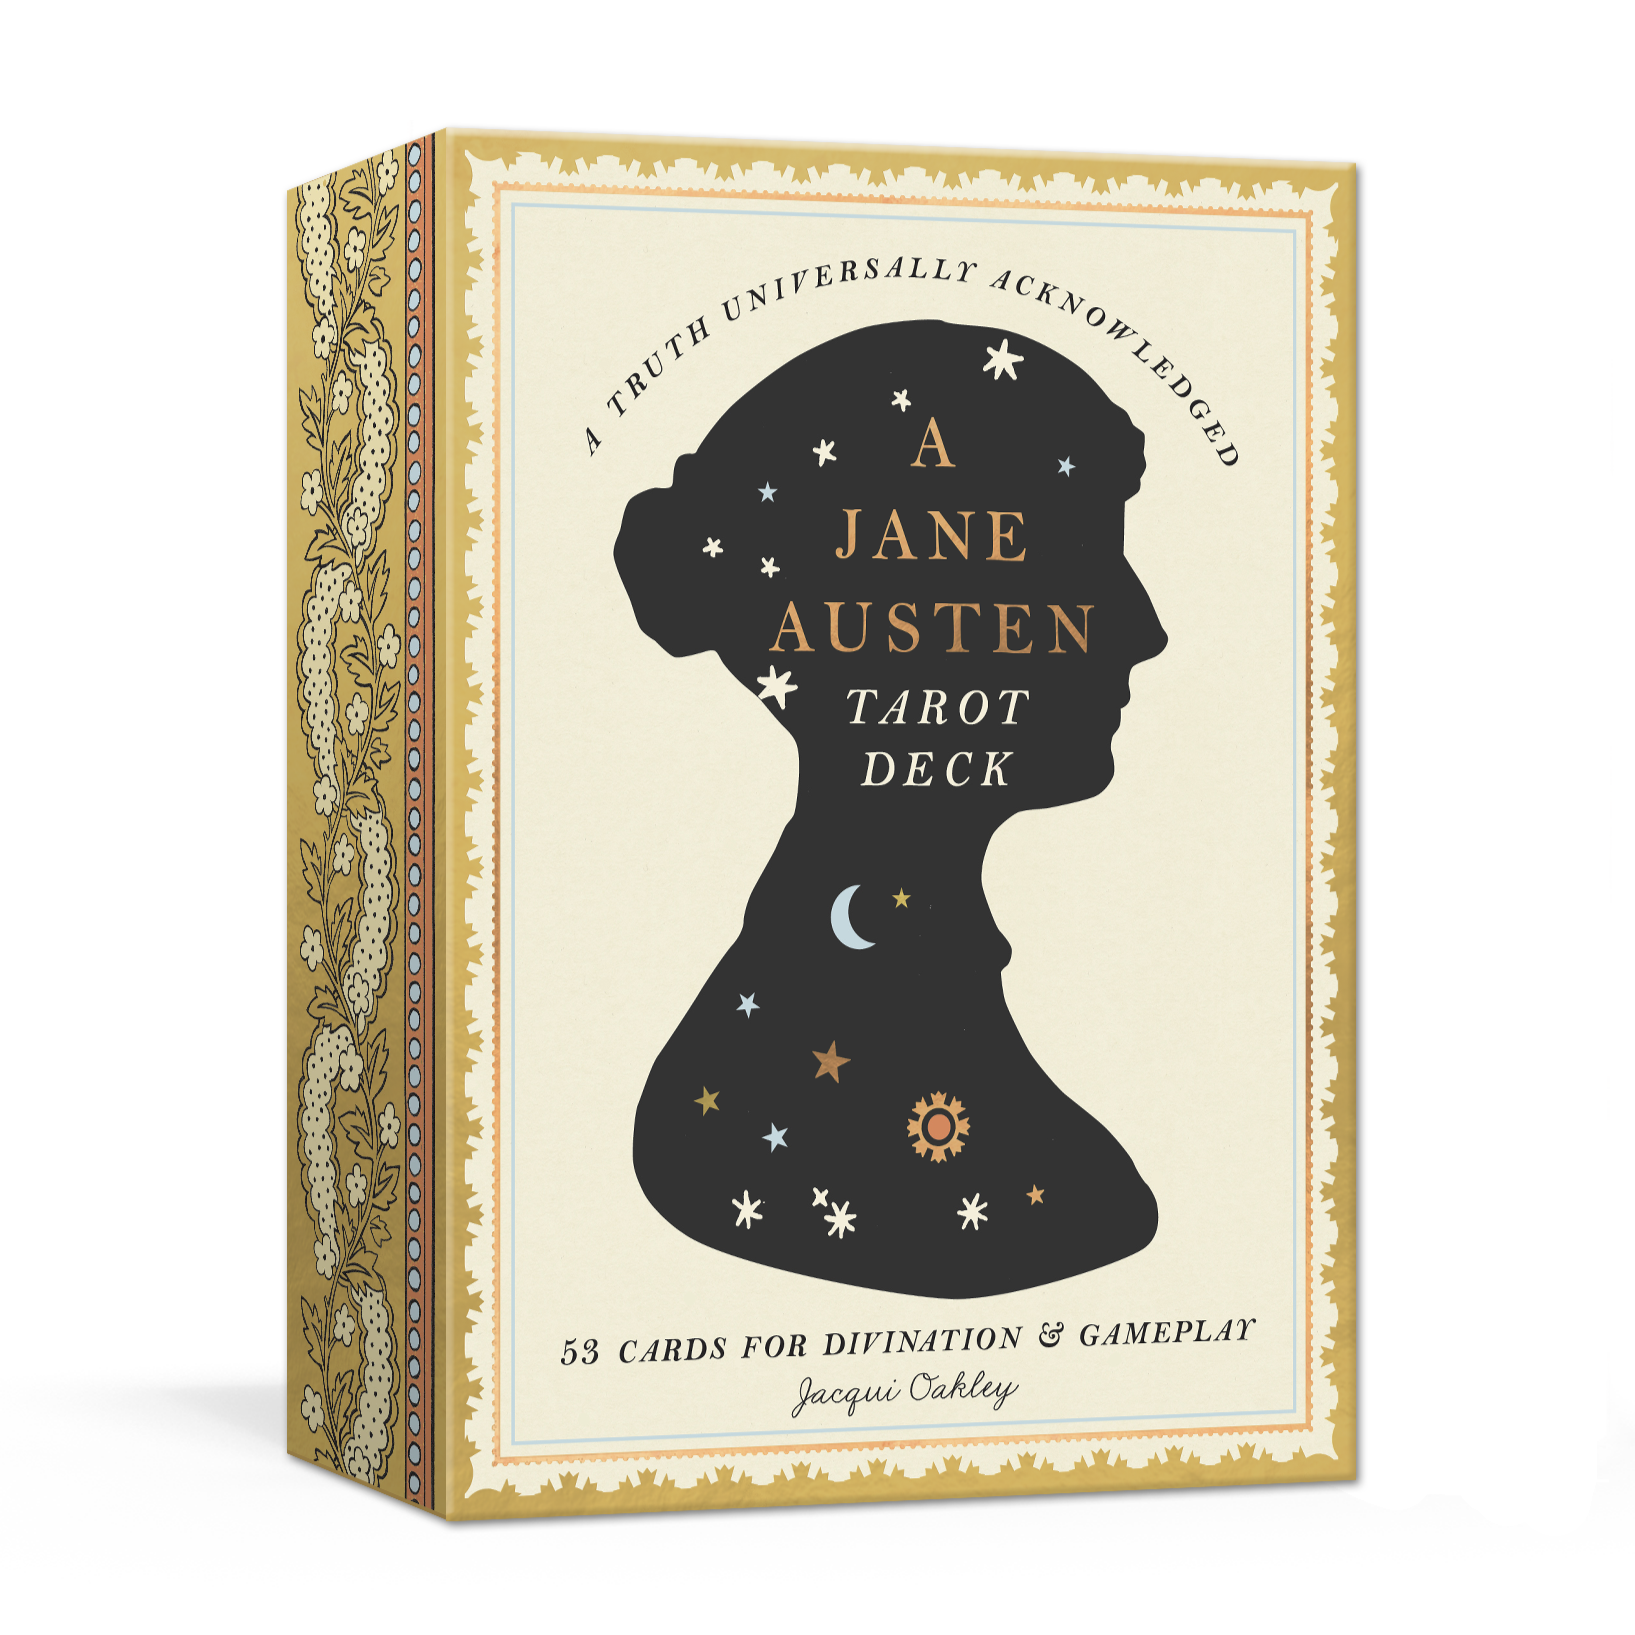 A Jane Austen Tarot Deck by Jacqui Oakle